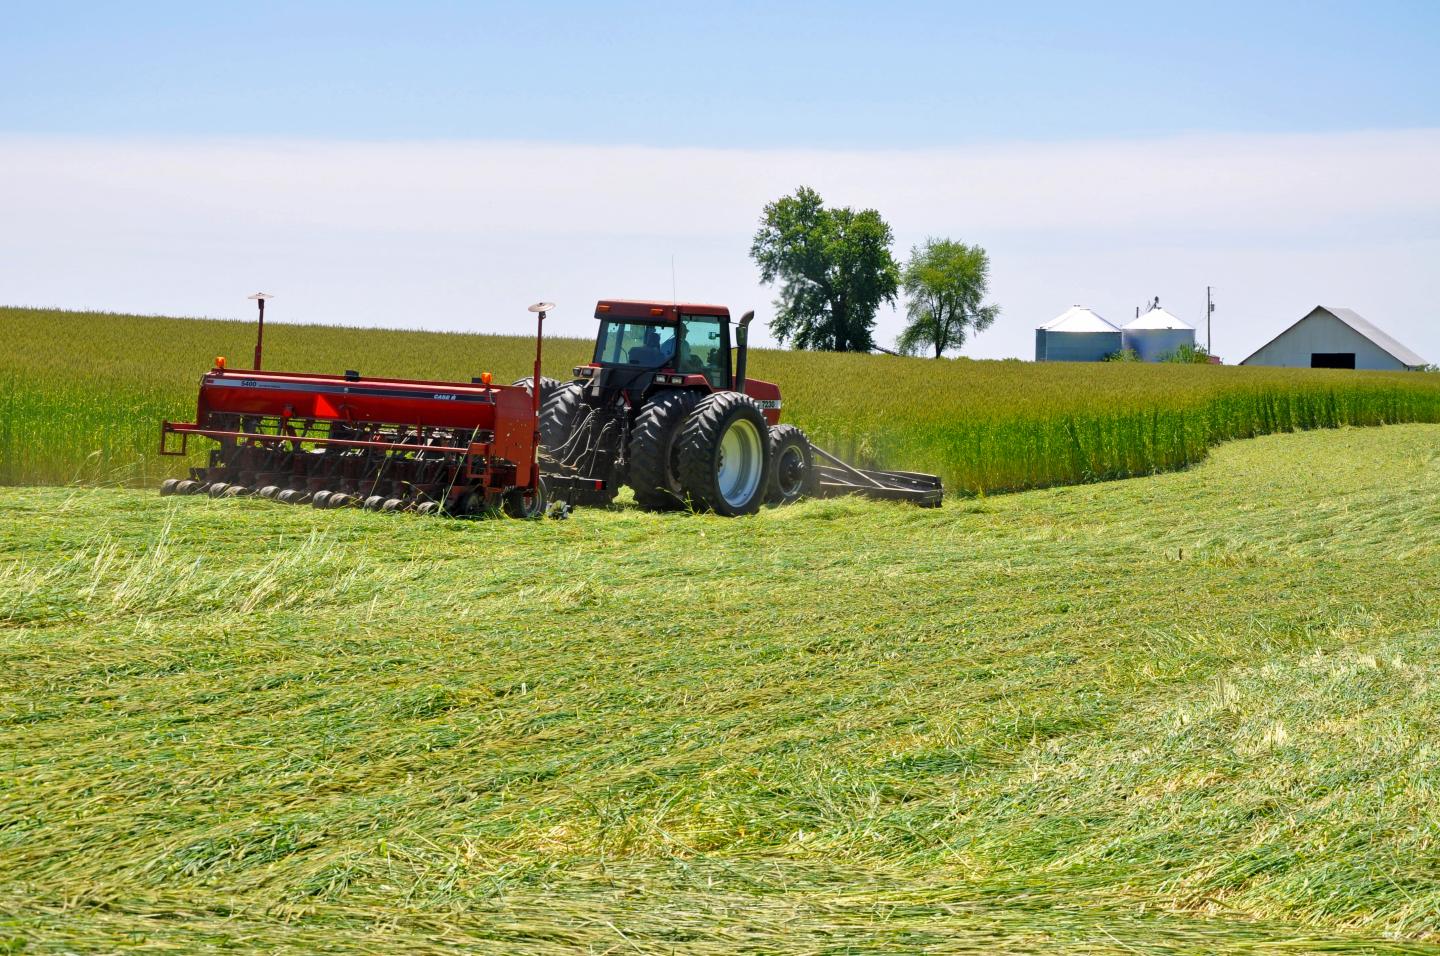 Iowa Farmer crimps cereal rye cover crop